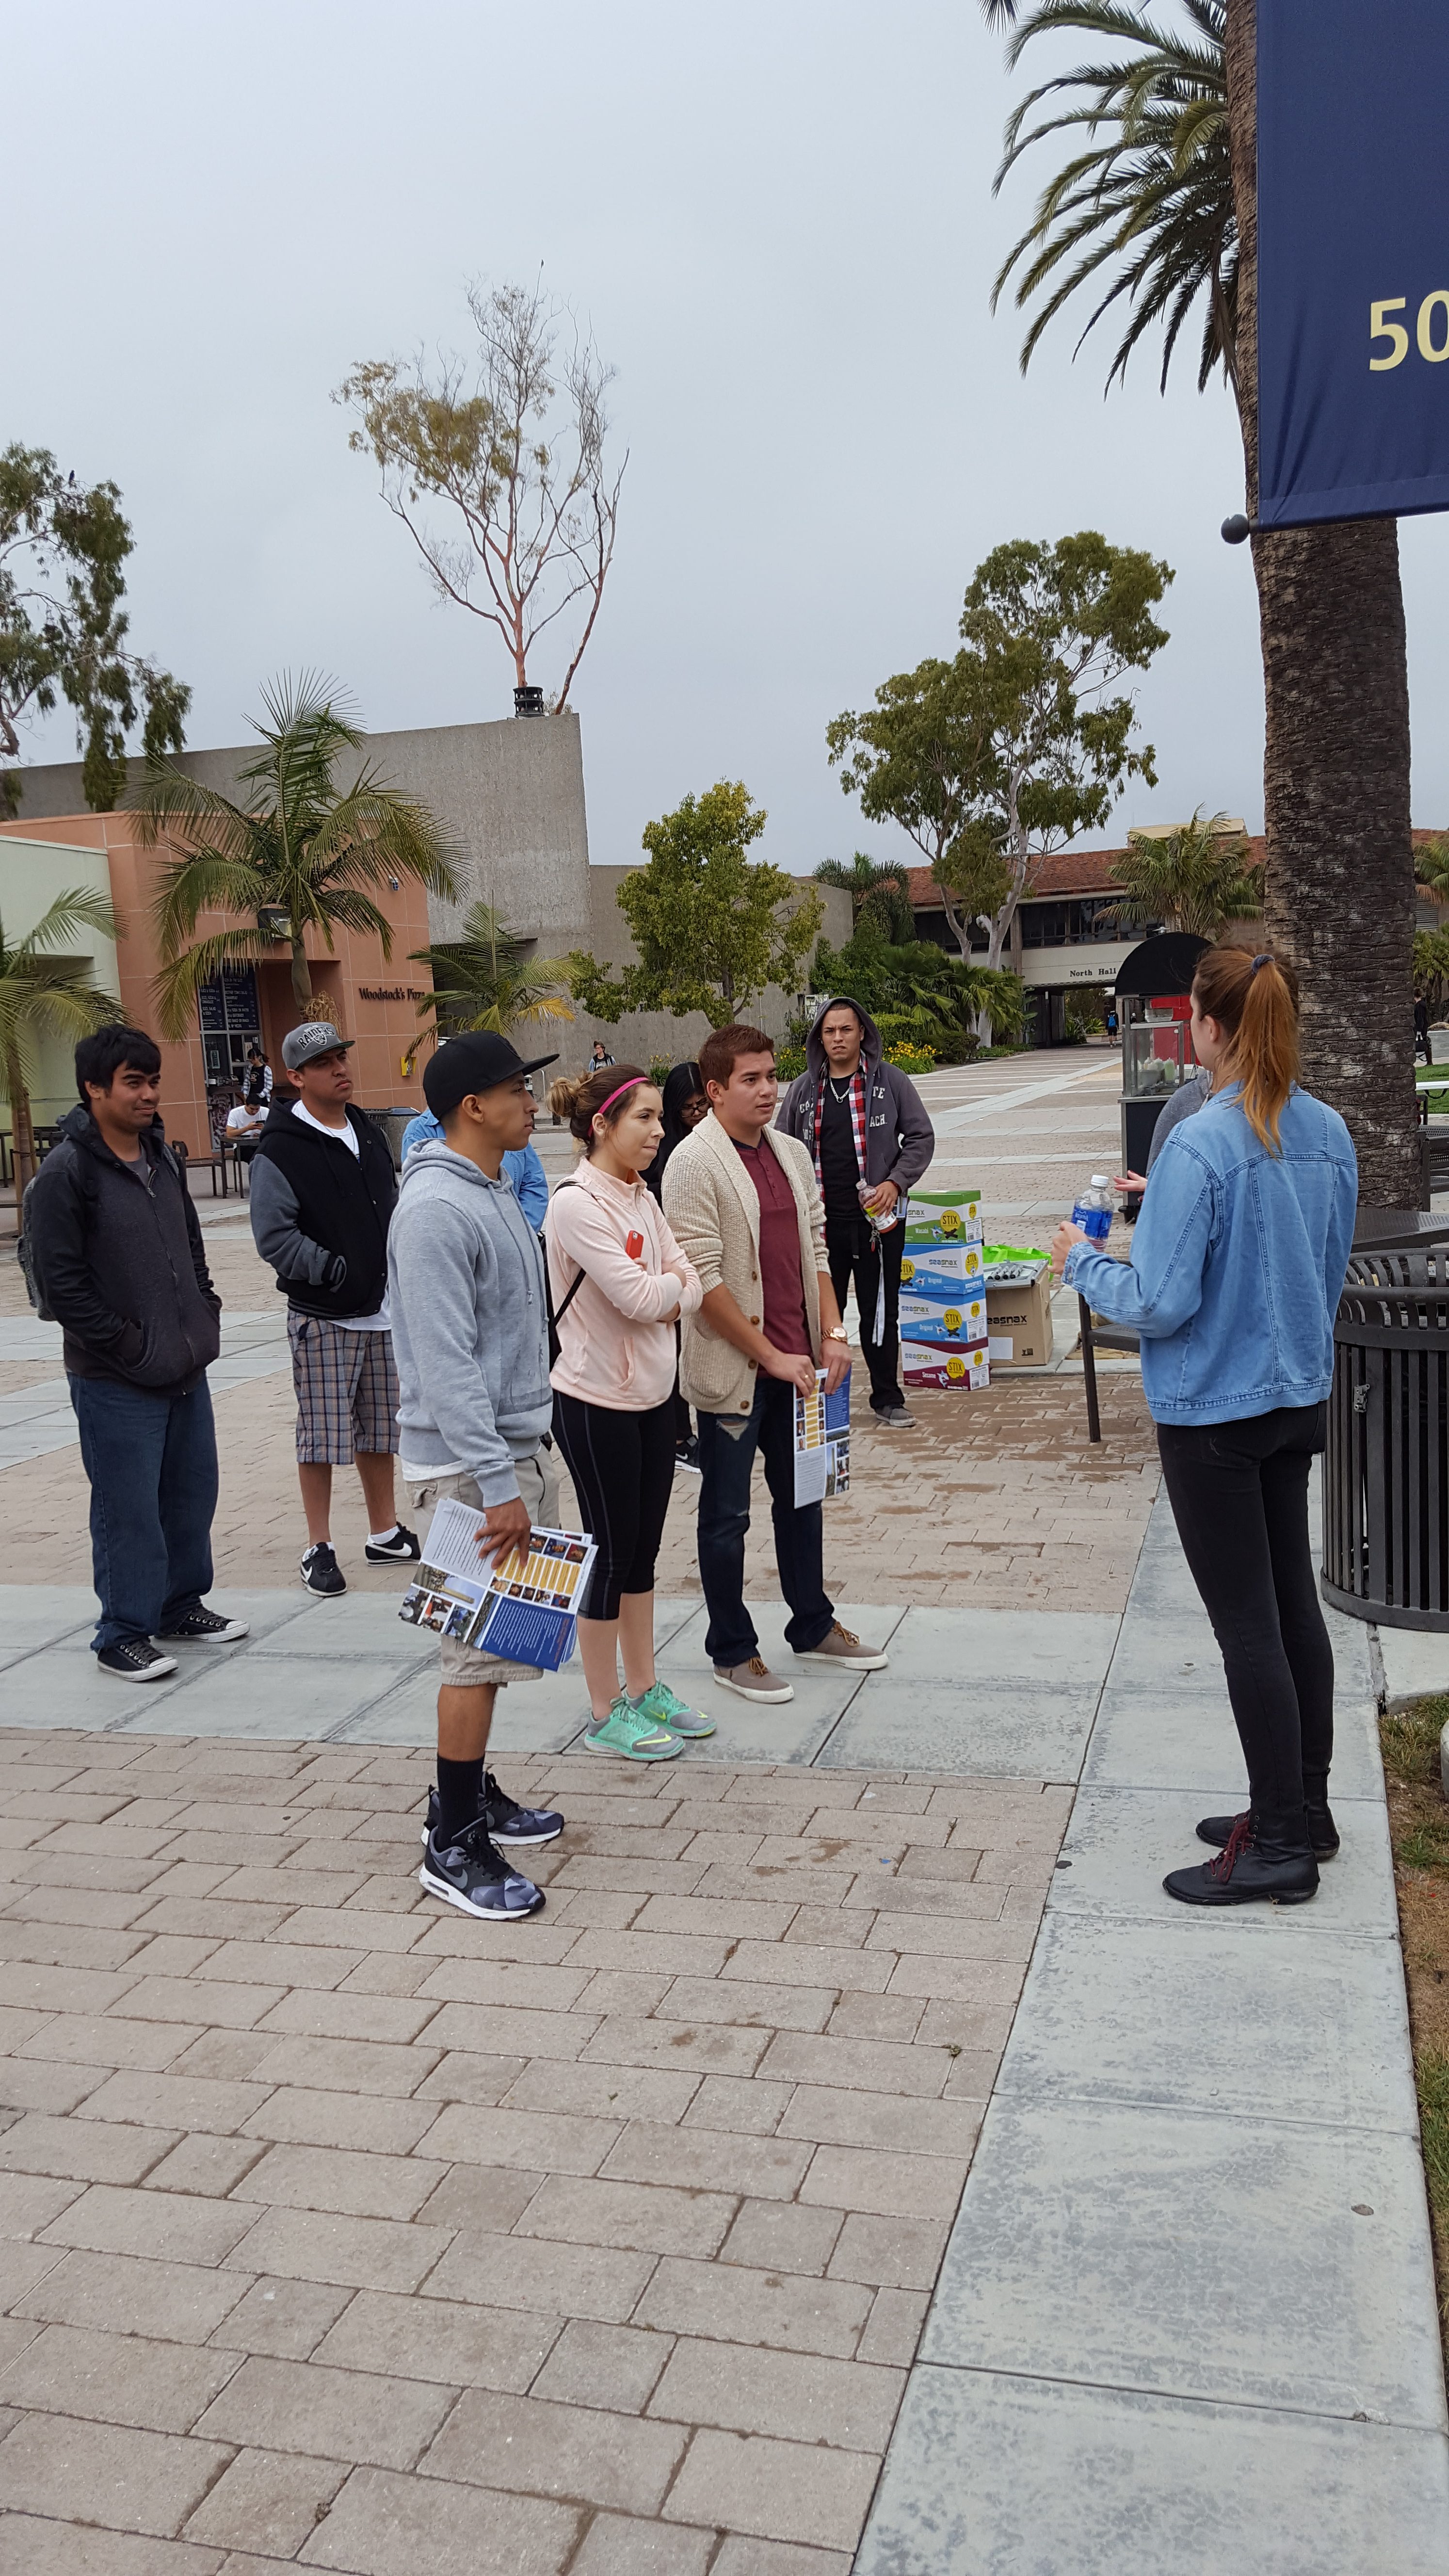 EOPS students on field trip to University of California, Santa Barbara